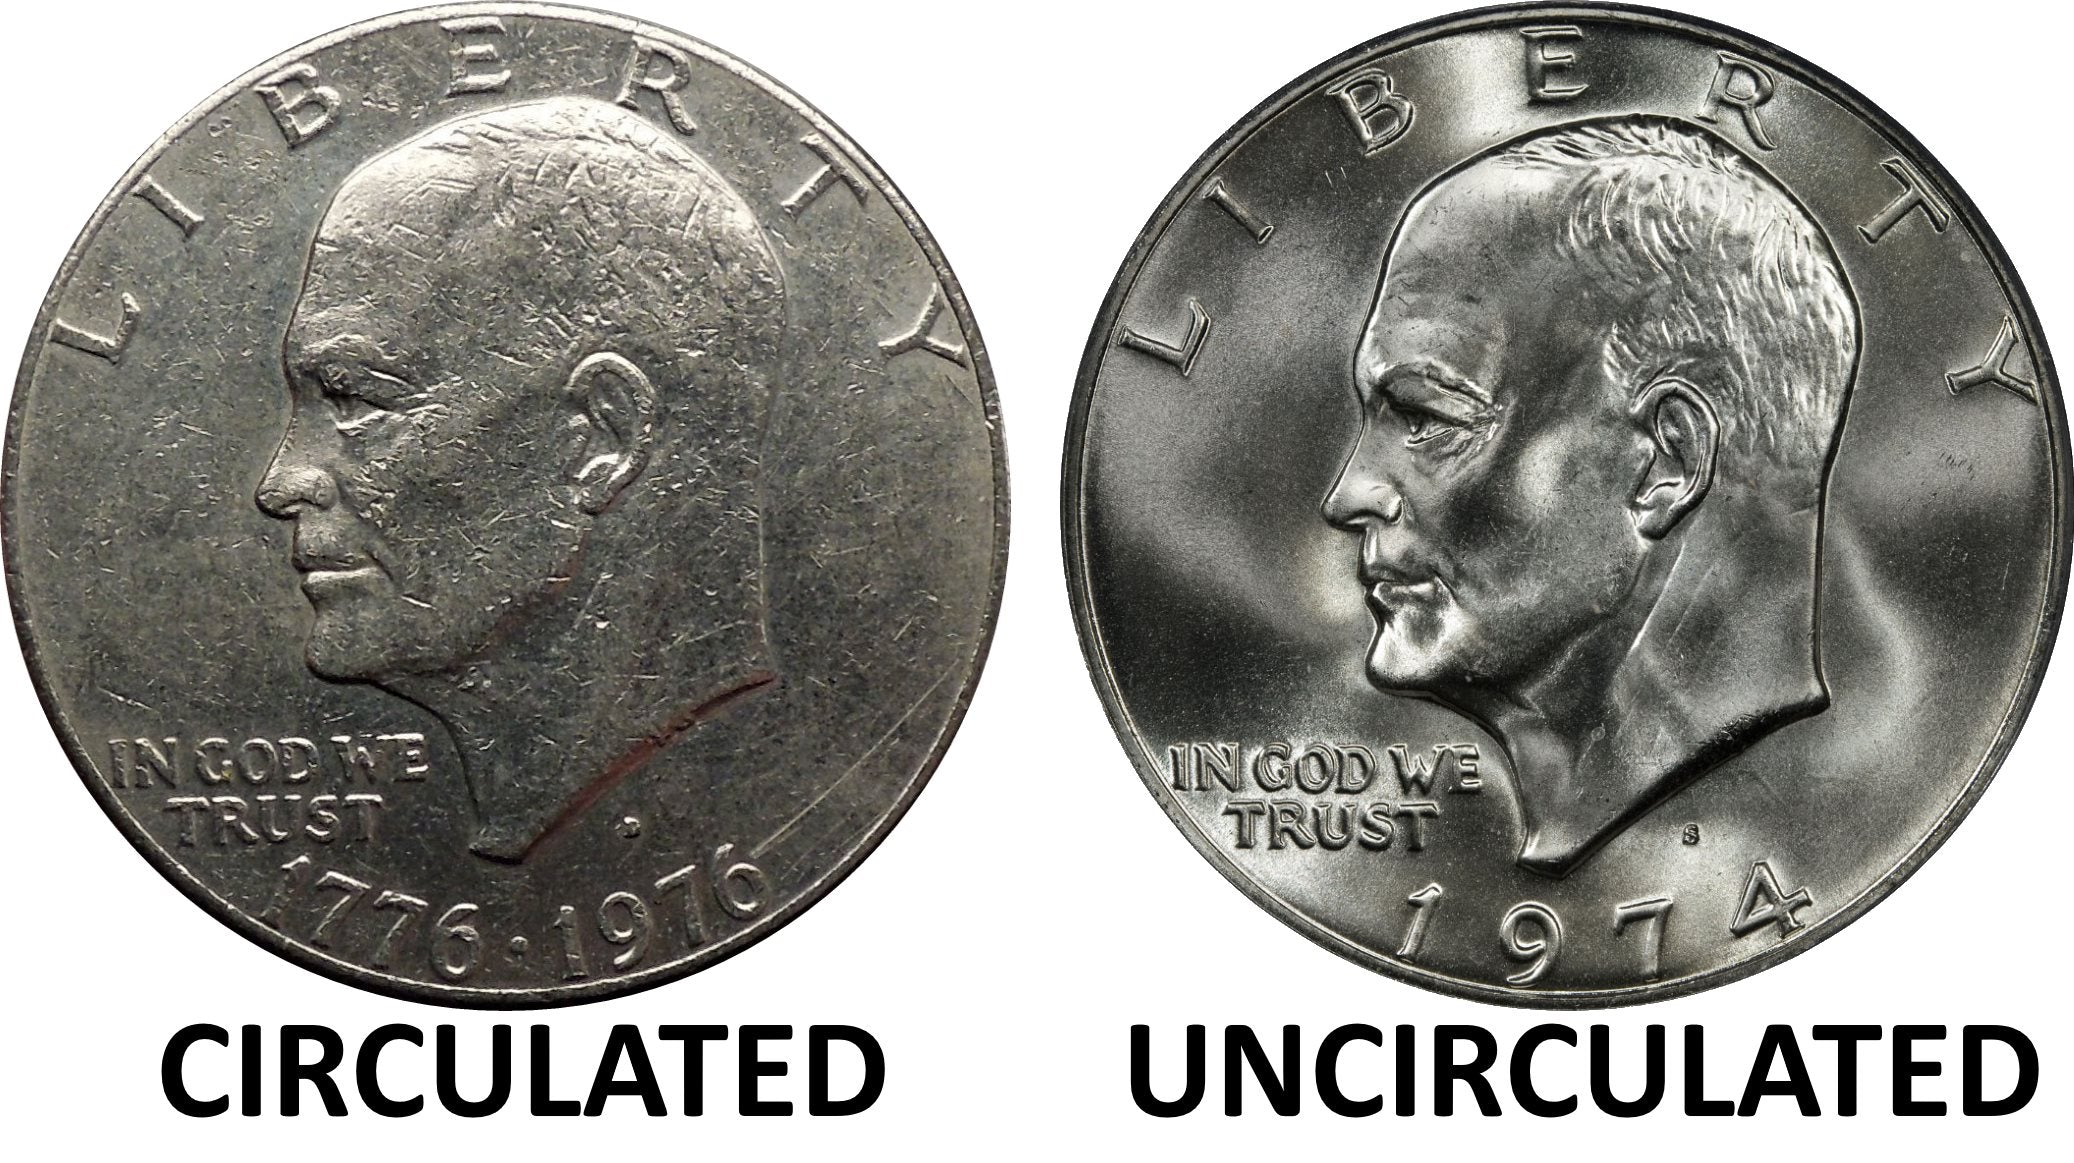 Eisenhower One Dollar Coin Value Chart